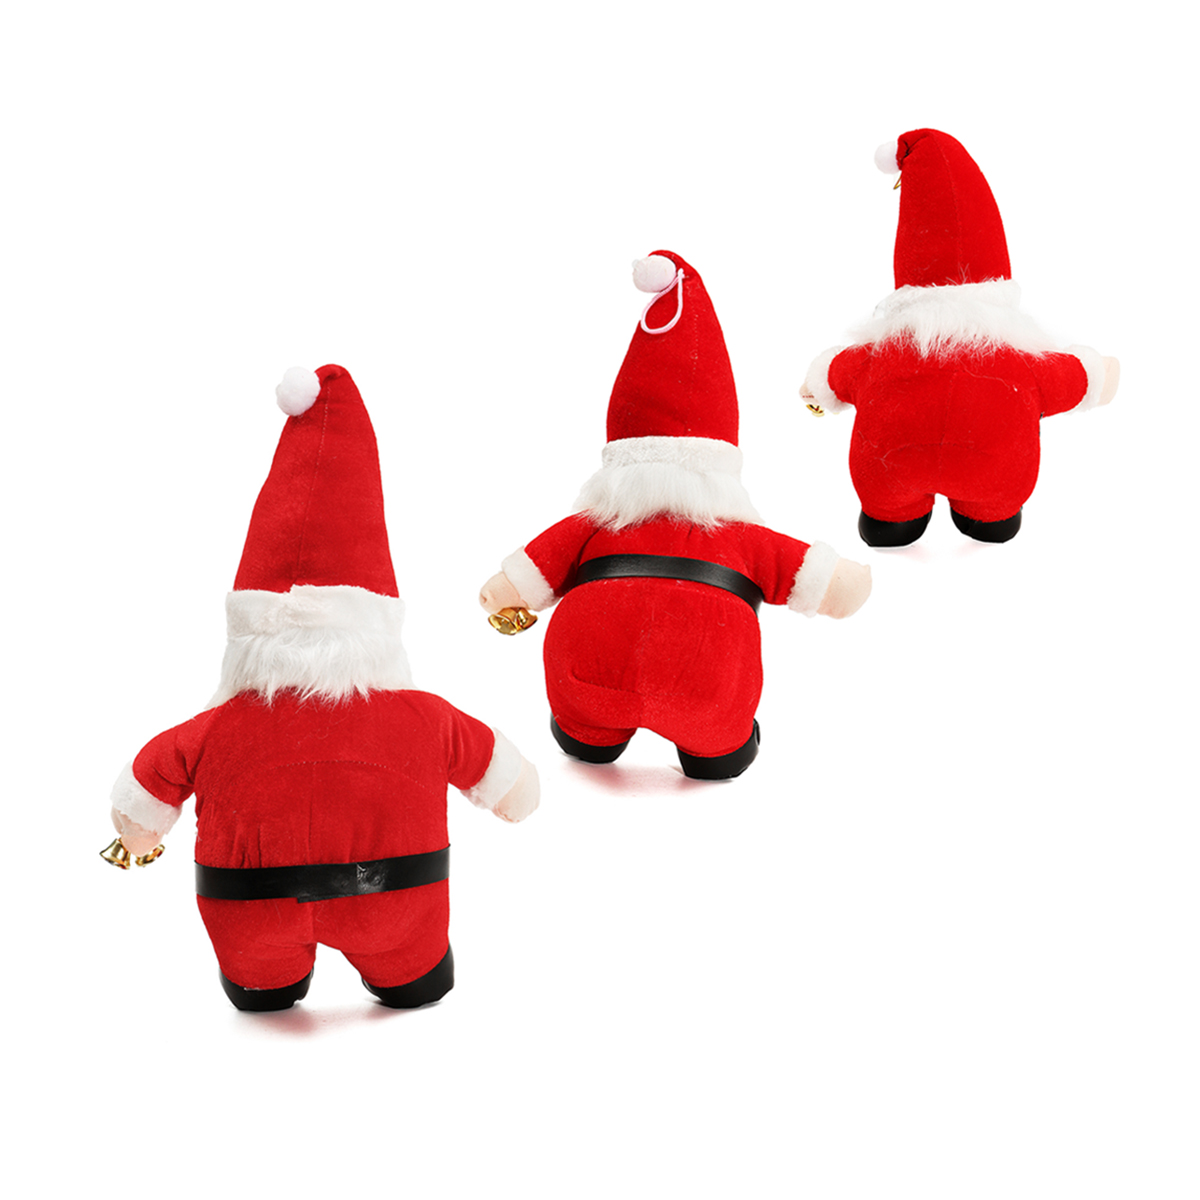 Christmas-Santa-Claus-Doll-Gift-Present-Xmas-Tree-Hanging-Ornament-Home-Decor-1087849-6